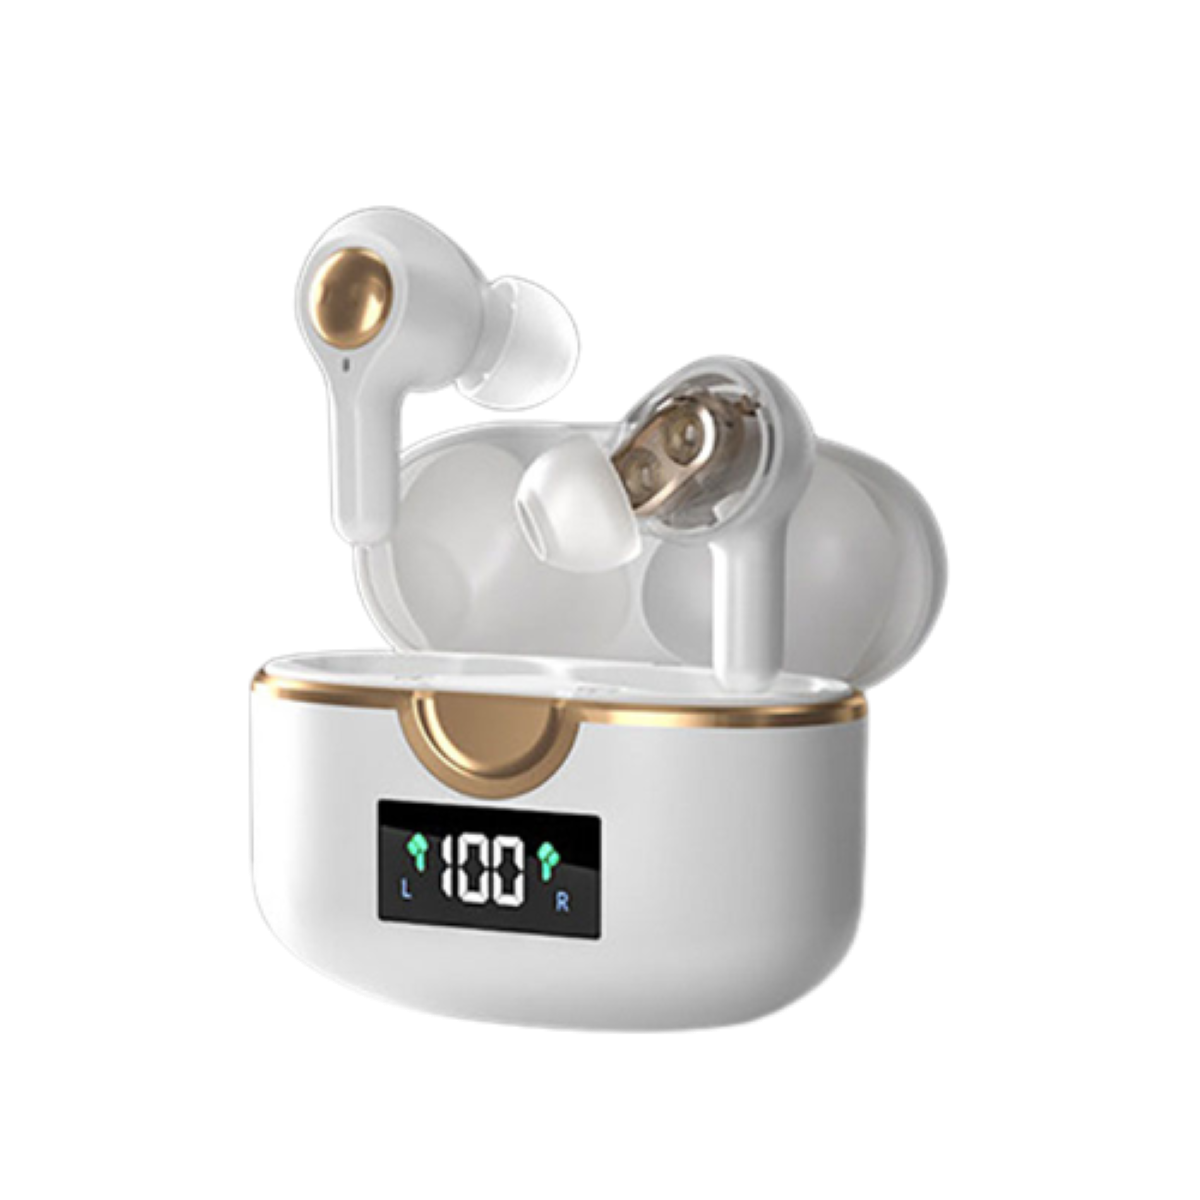 ENBAOXIN T22 Bluetooth Headset - Dual In-ear Bluetooth-Kopfhörer Tausend-Dollar-Klangqualität, Host Chip, Bluetooth Weiß